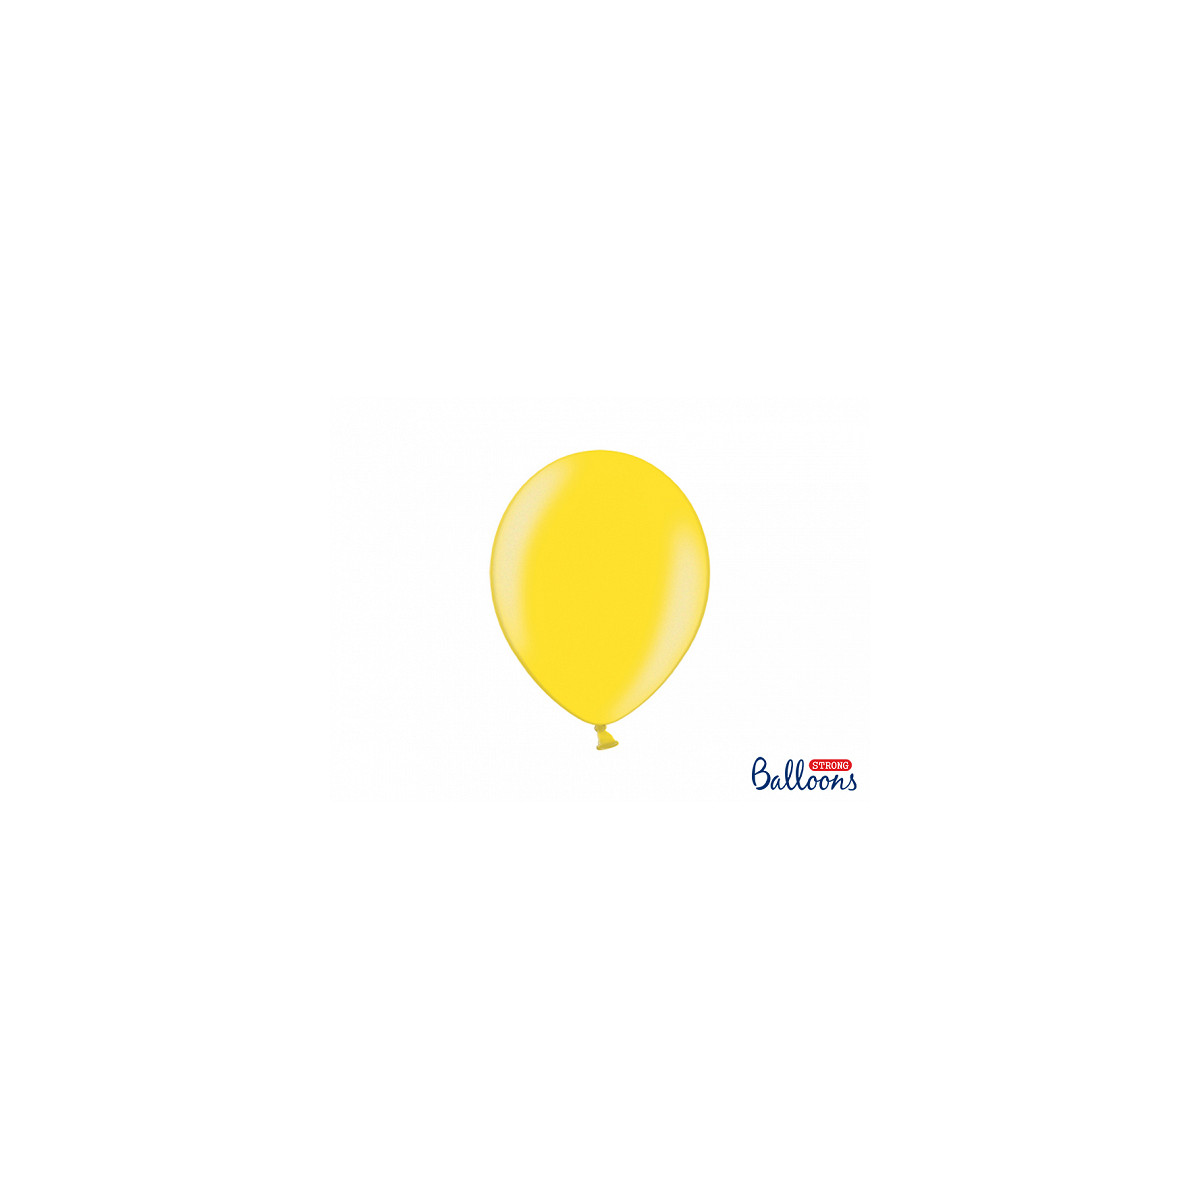 x10 Ballons metallic jaune